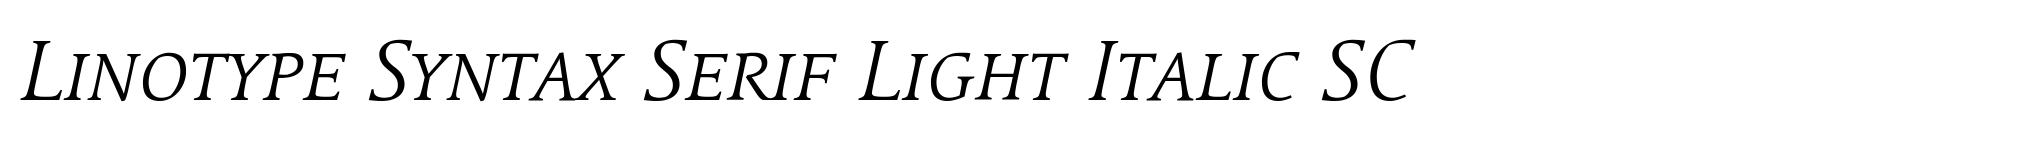 Linotype Syntax Serif Light Italic SC image